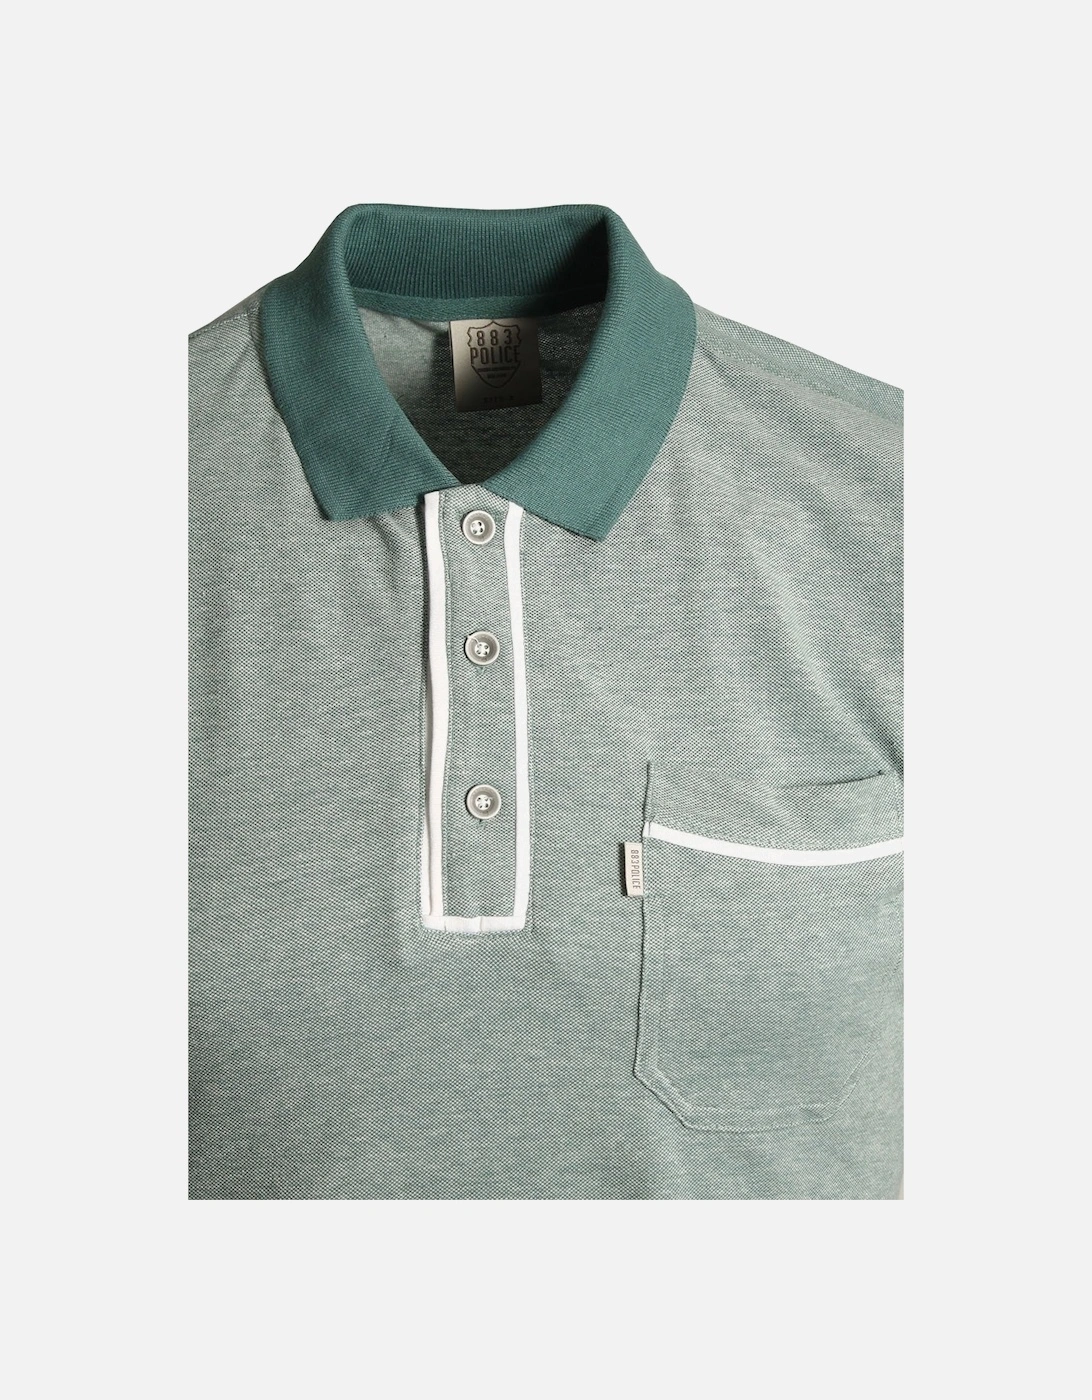 Lennox Polo Shirt | Eclipse Navy & Seapine Green